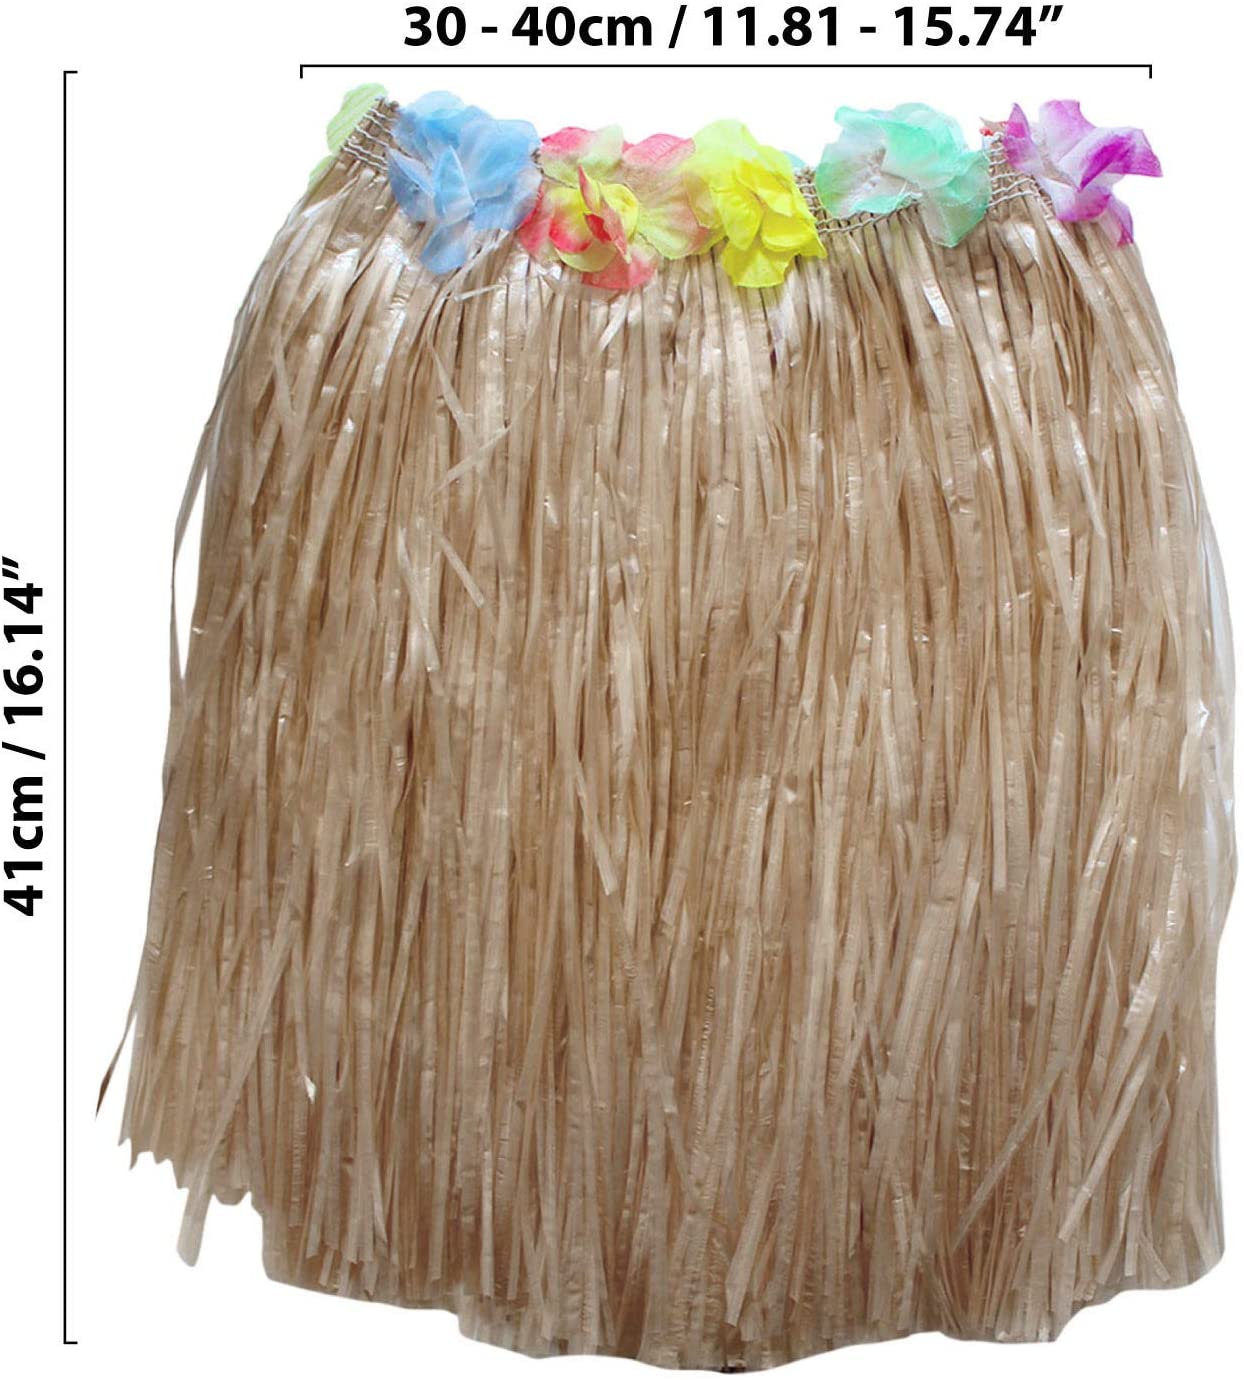 Kurtzy Hawaiian Hula Grass Skirt (6 Pack) – Elastic Luau Skirts with ...